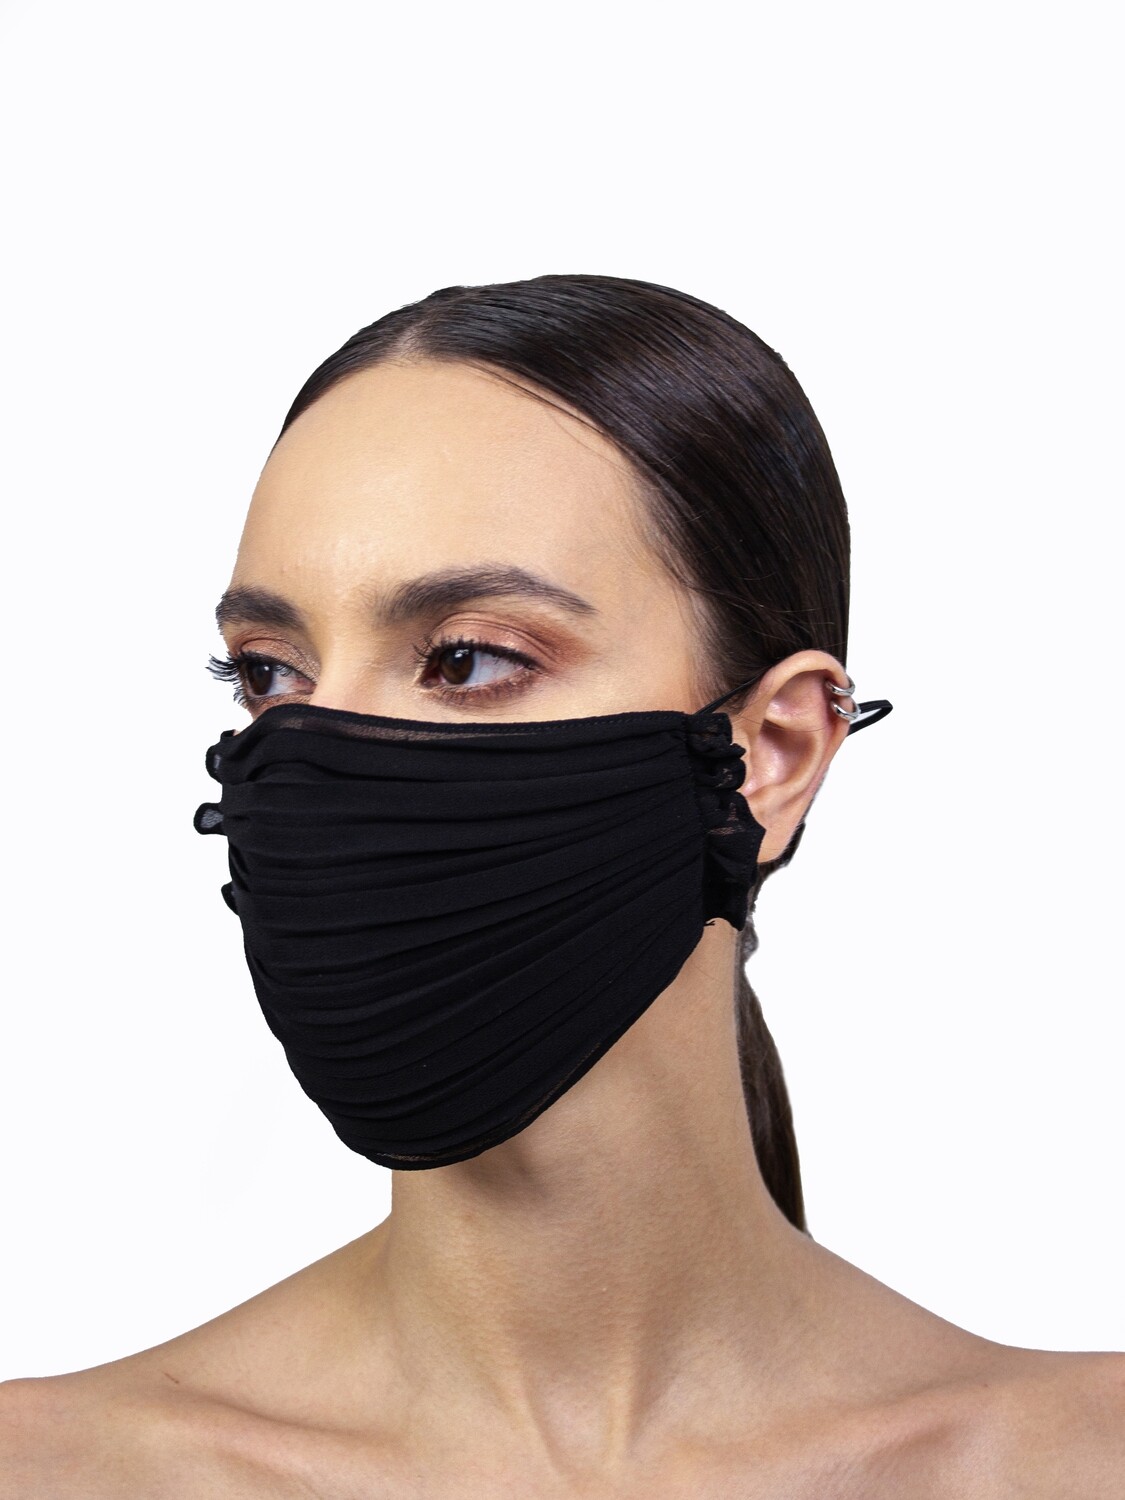 Sensitive-Skin Friendly: Designer Face Mask For Eid